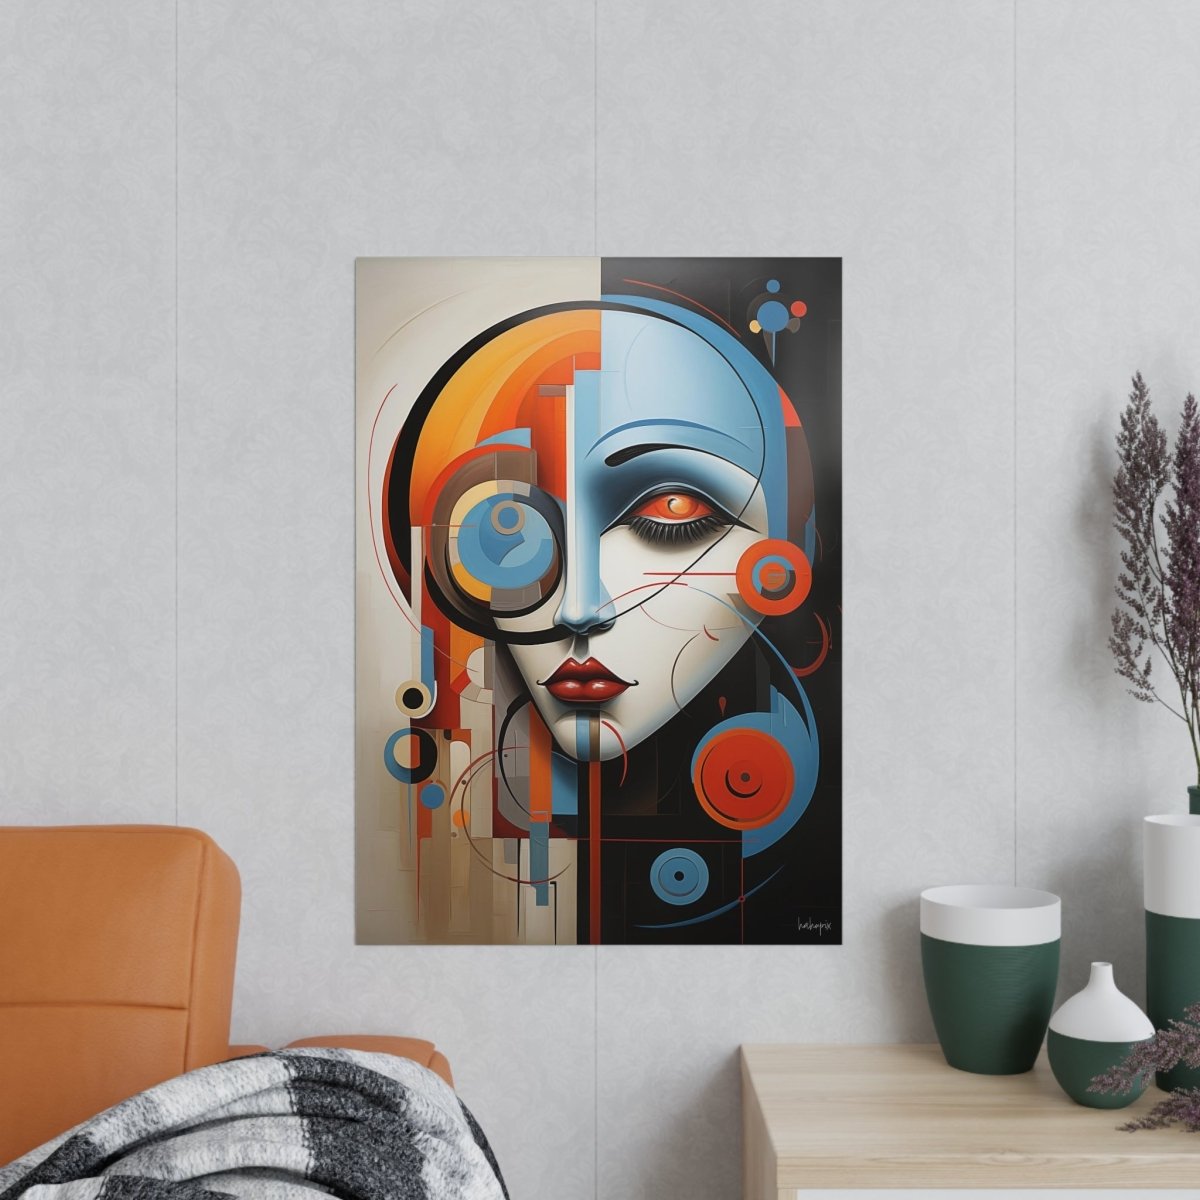 Abstraktes Kunstposter - Woman Face Art Poster - Poster bei HappyHugPixels